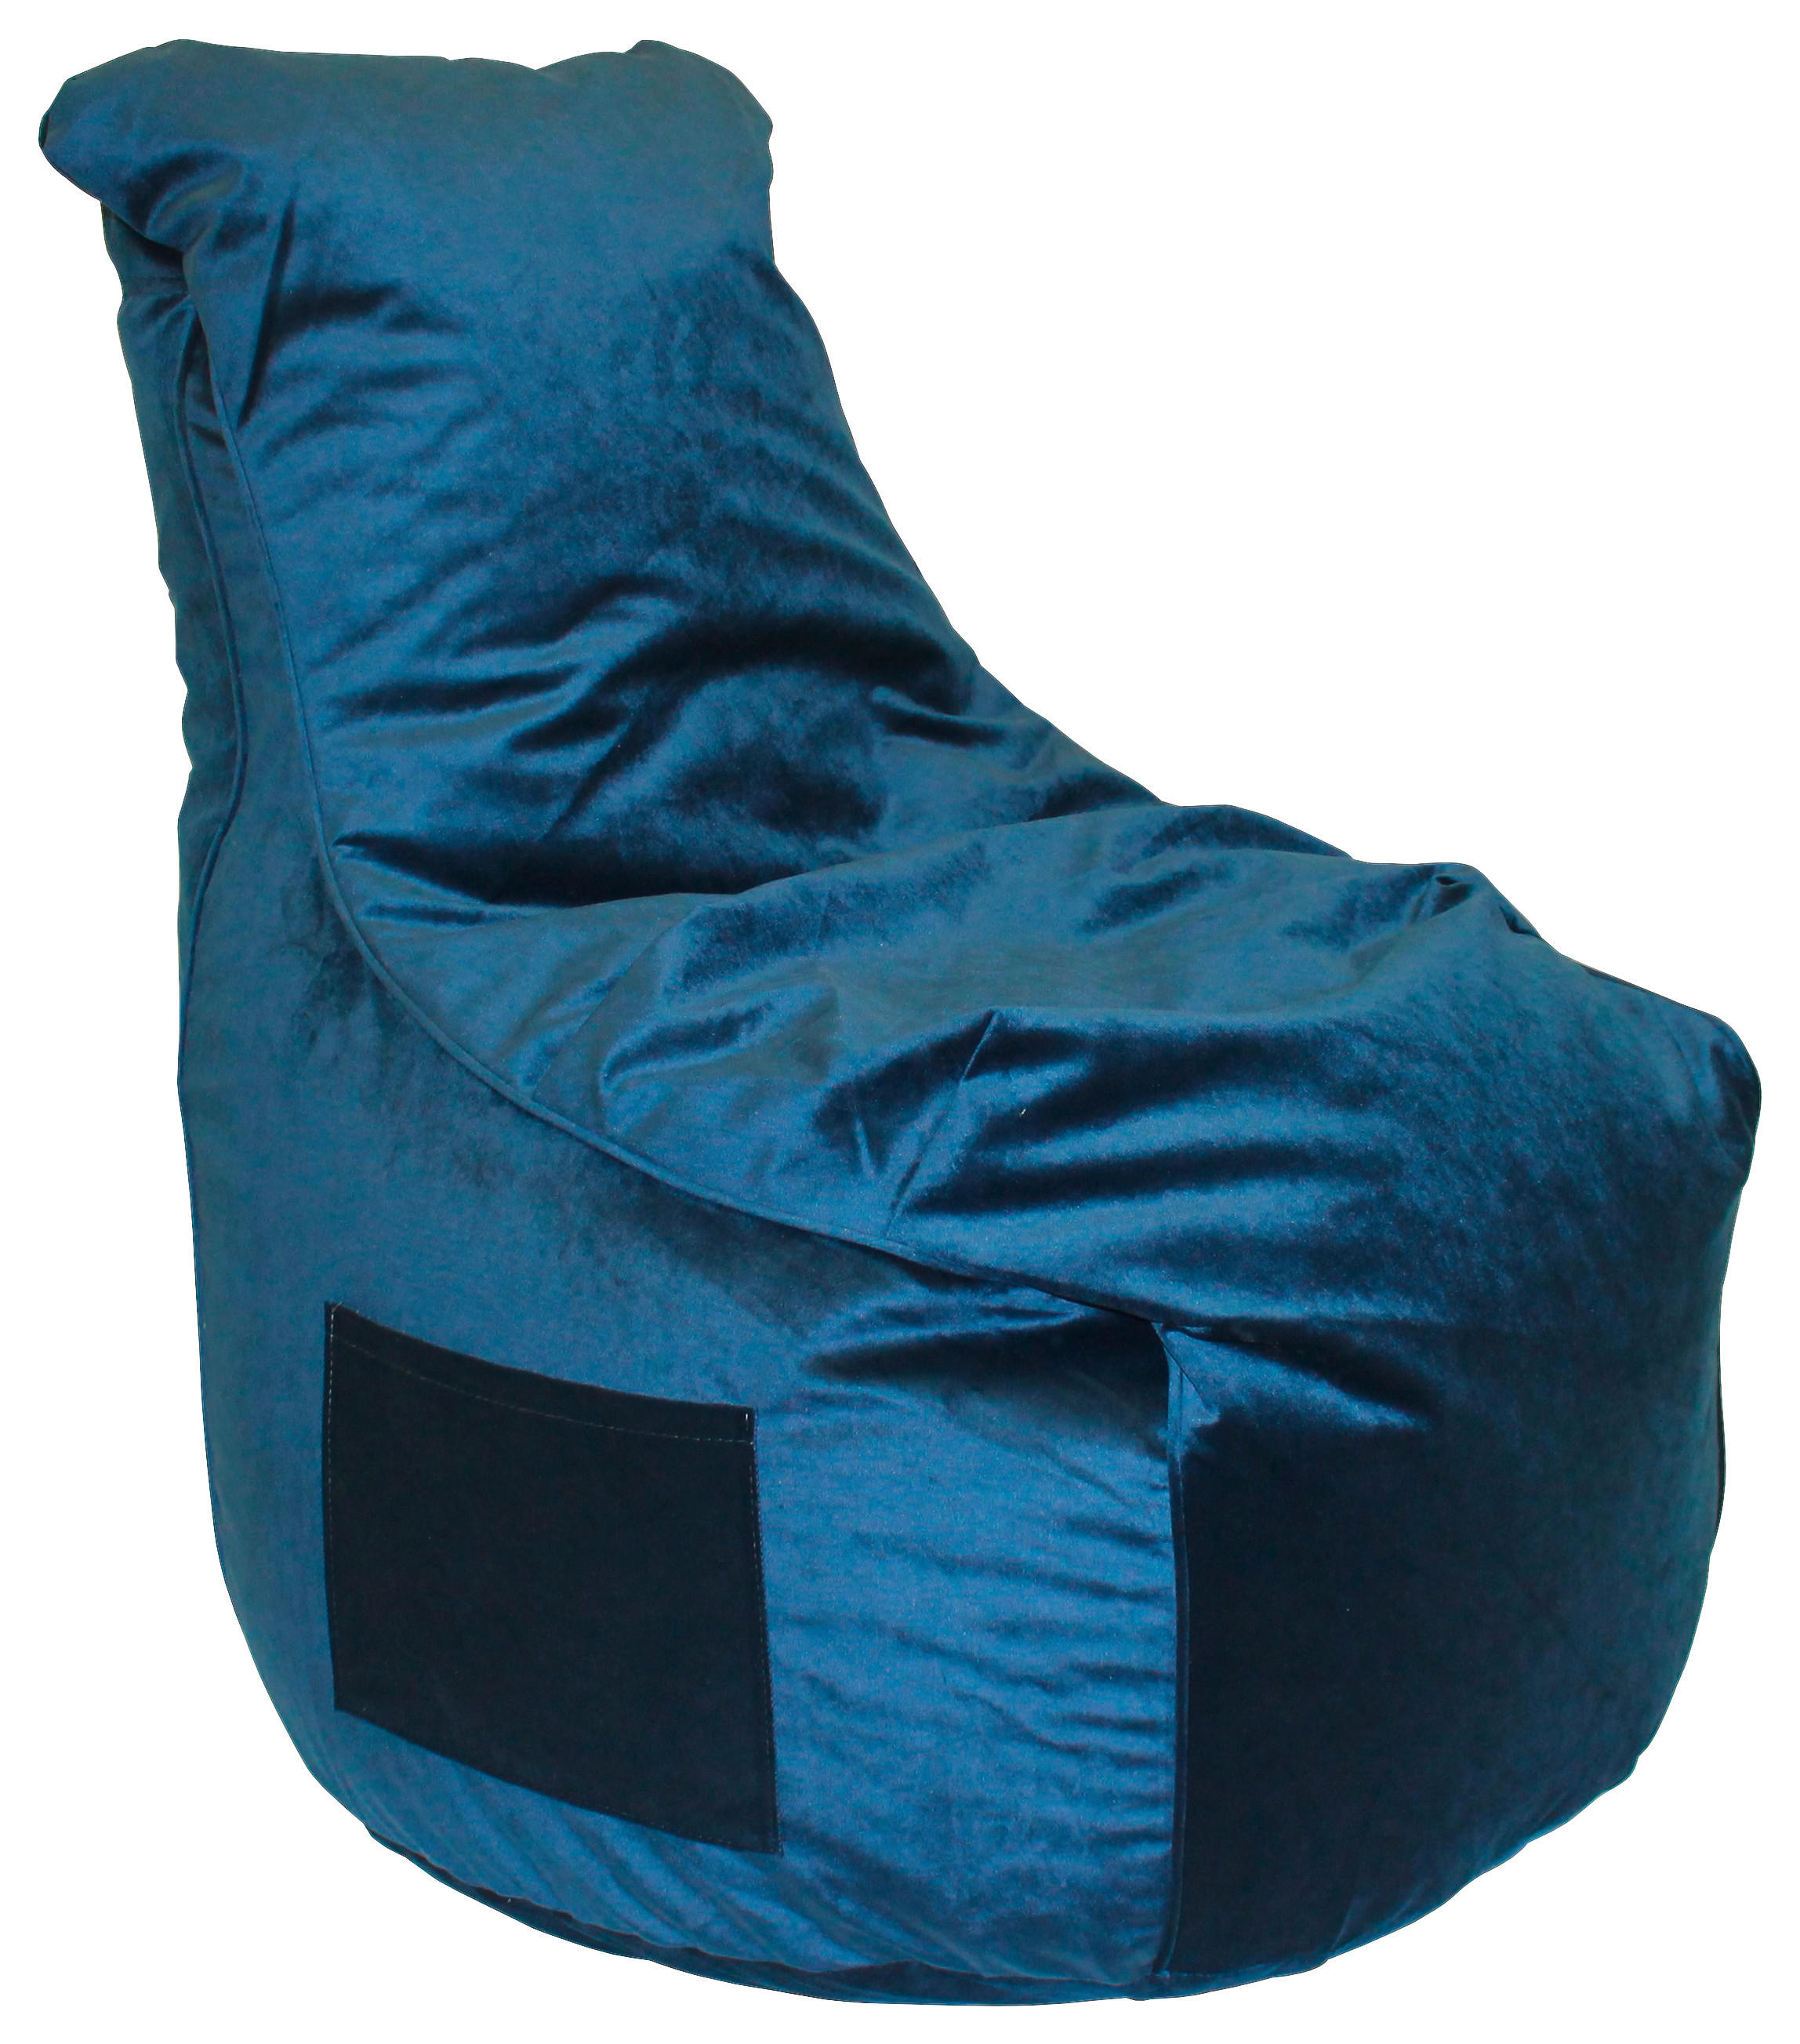 Sitzsack aus Nylon in Dunkelblau jetzt kaufen | Sitzsäcke